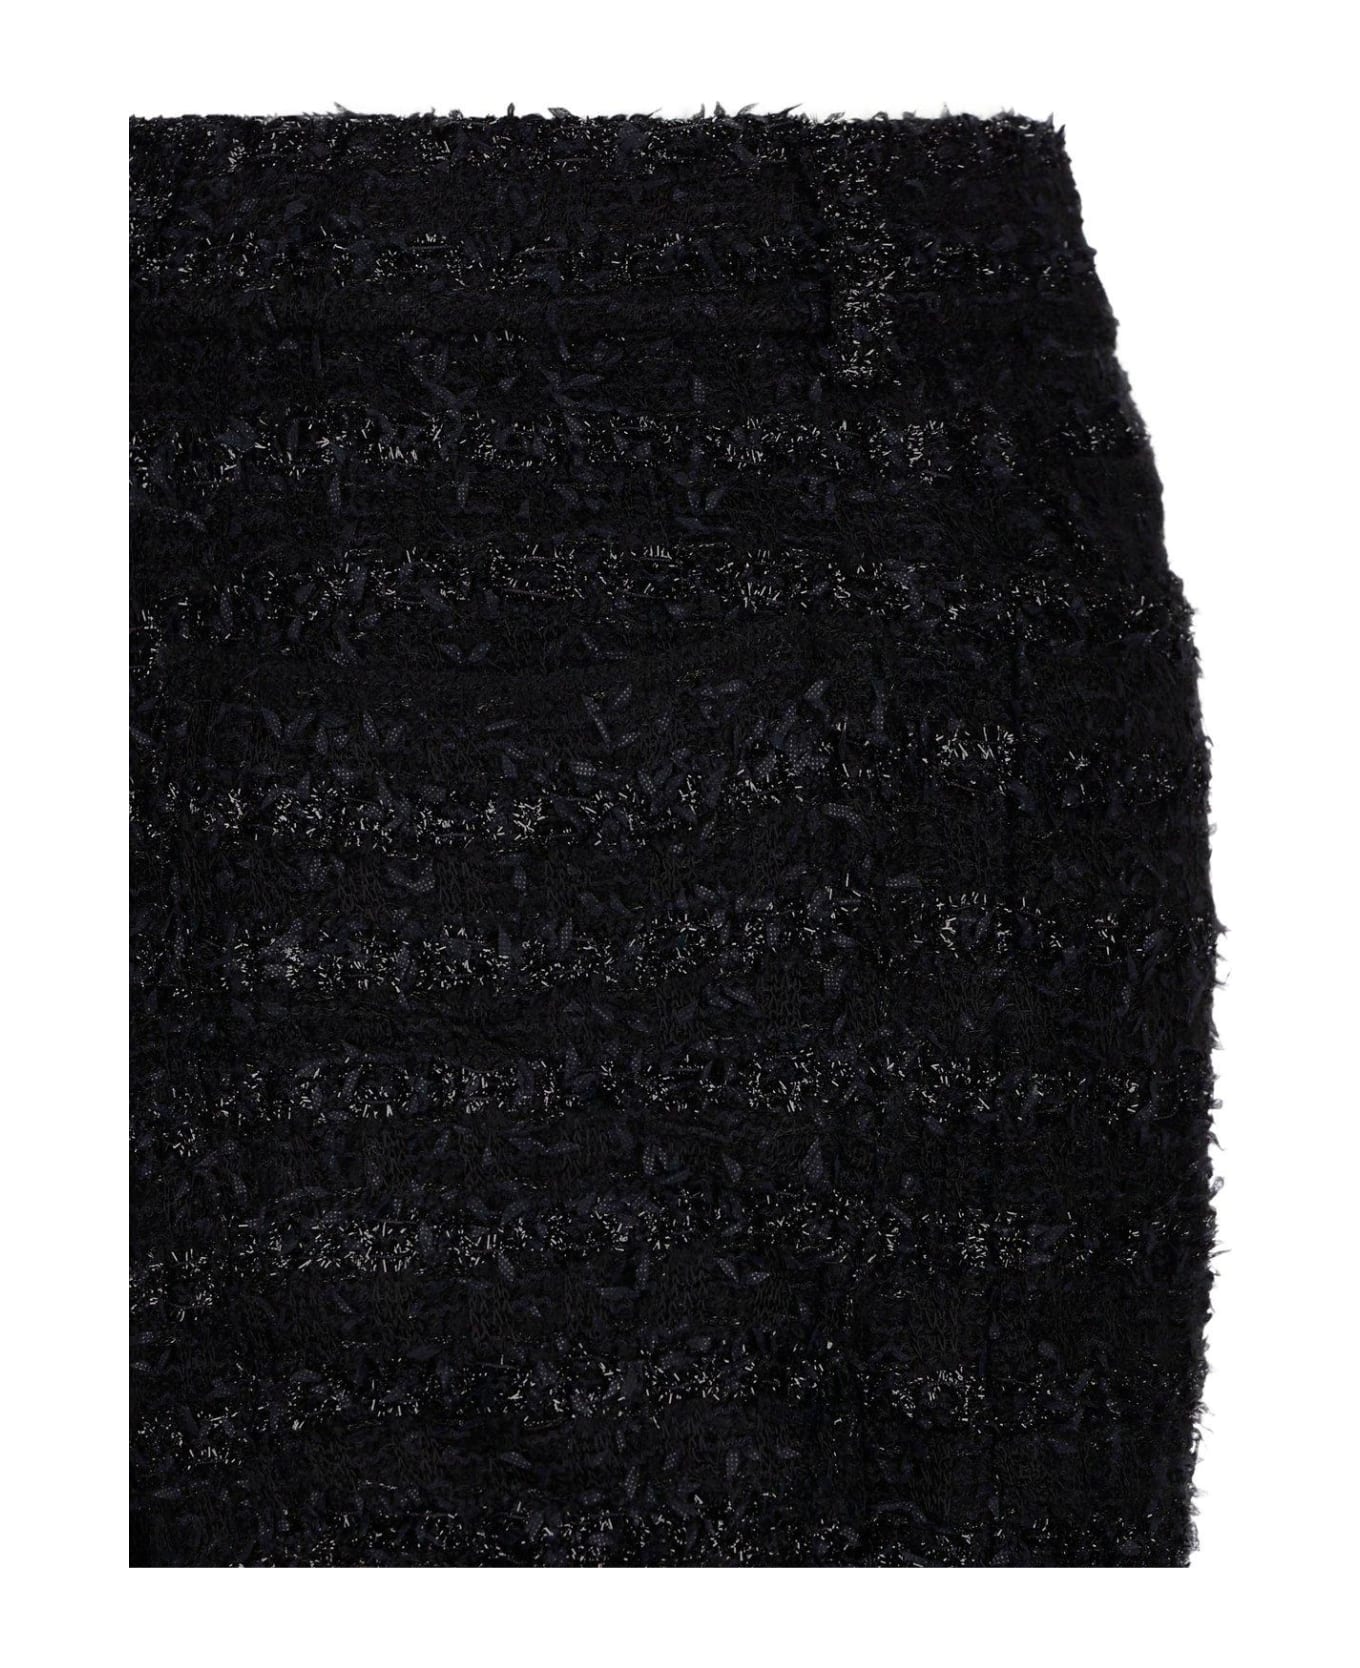 Balenciaga Tweed Metallic Thread Trousers - Black ボトムス